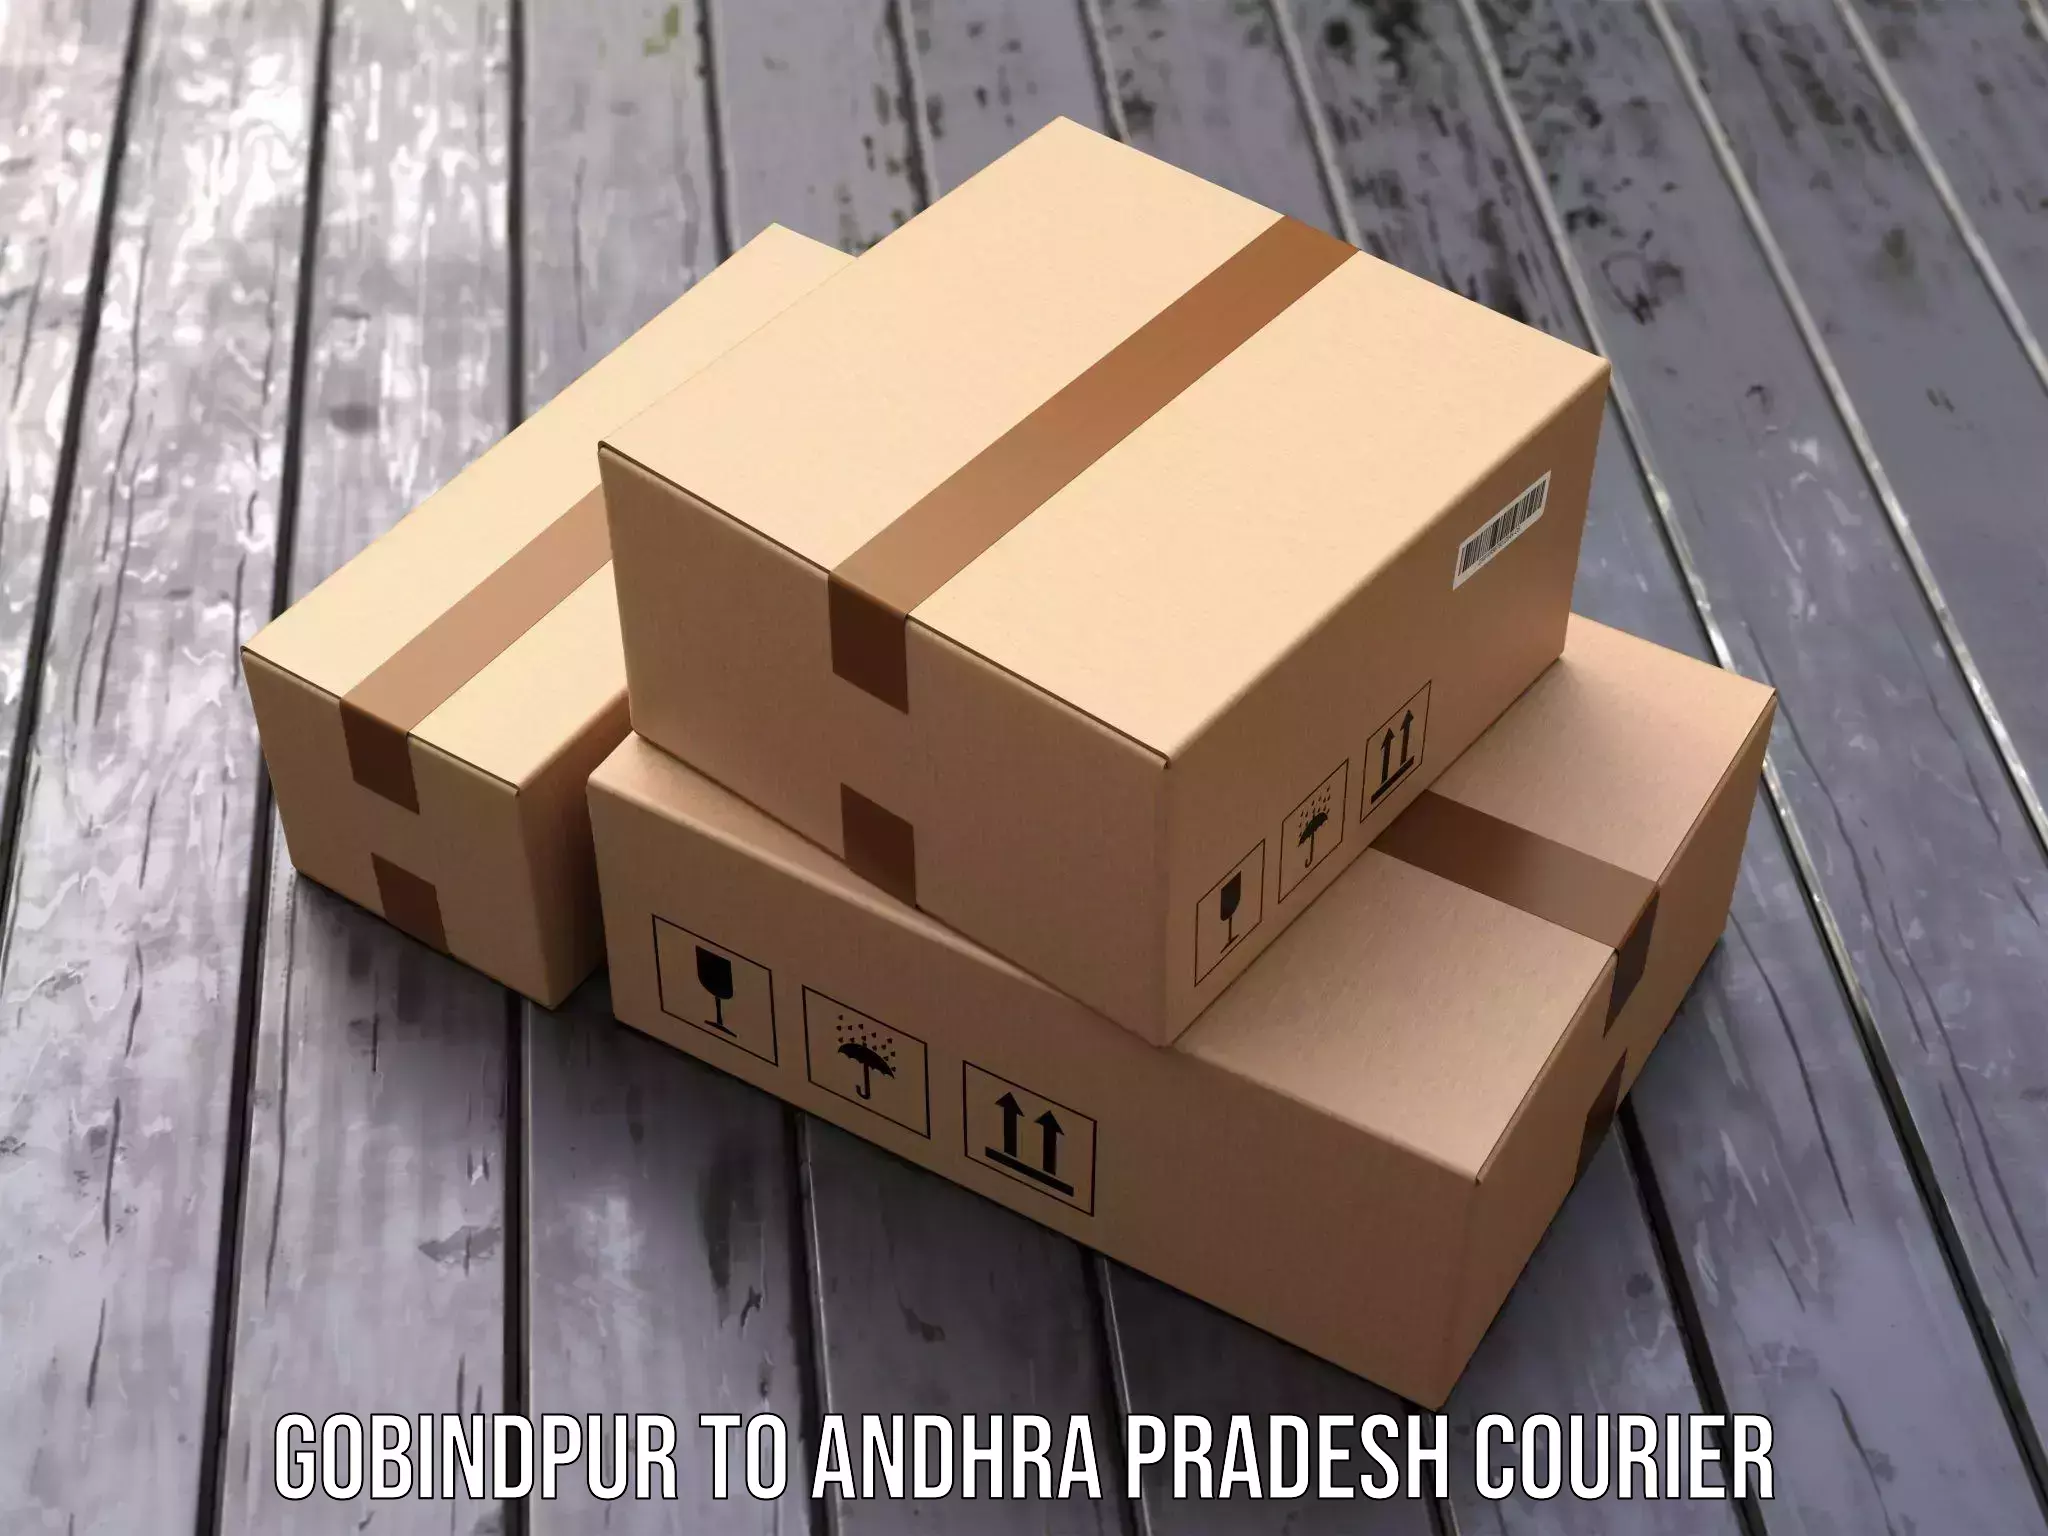 High-speed parcel service Gobindpur to Andhra Pradesh